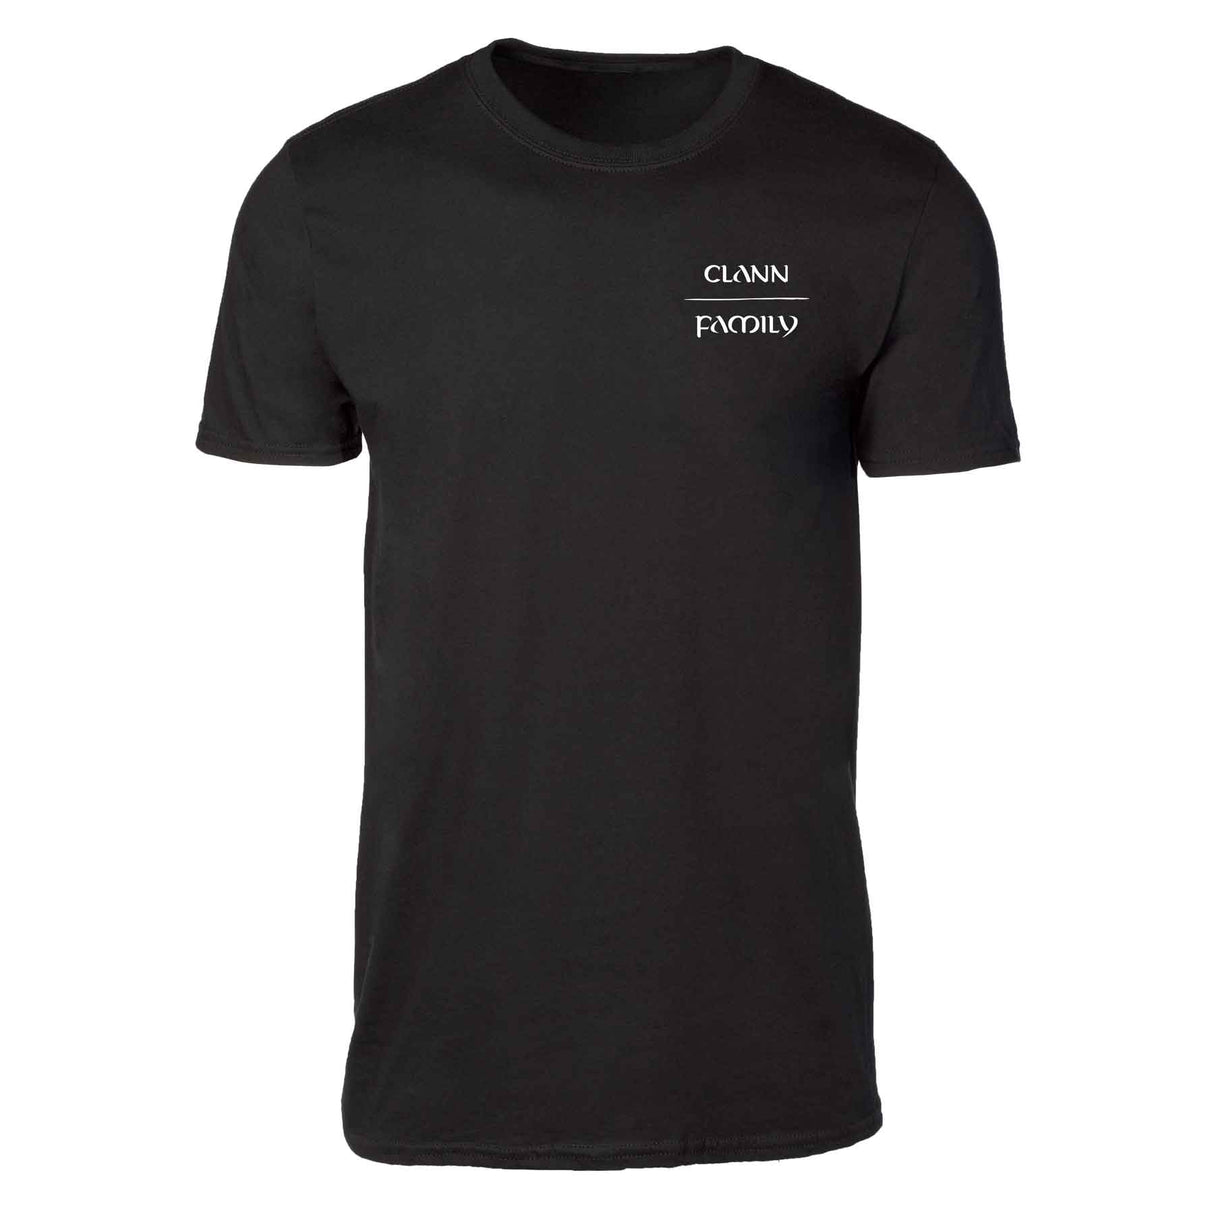 Ogham Family Shirt, Black - Creative Irish Gifts